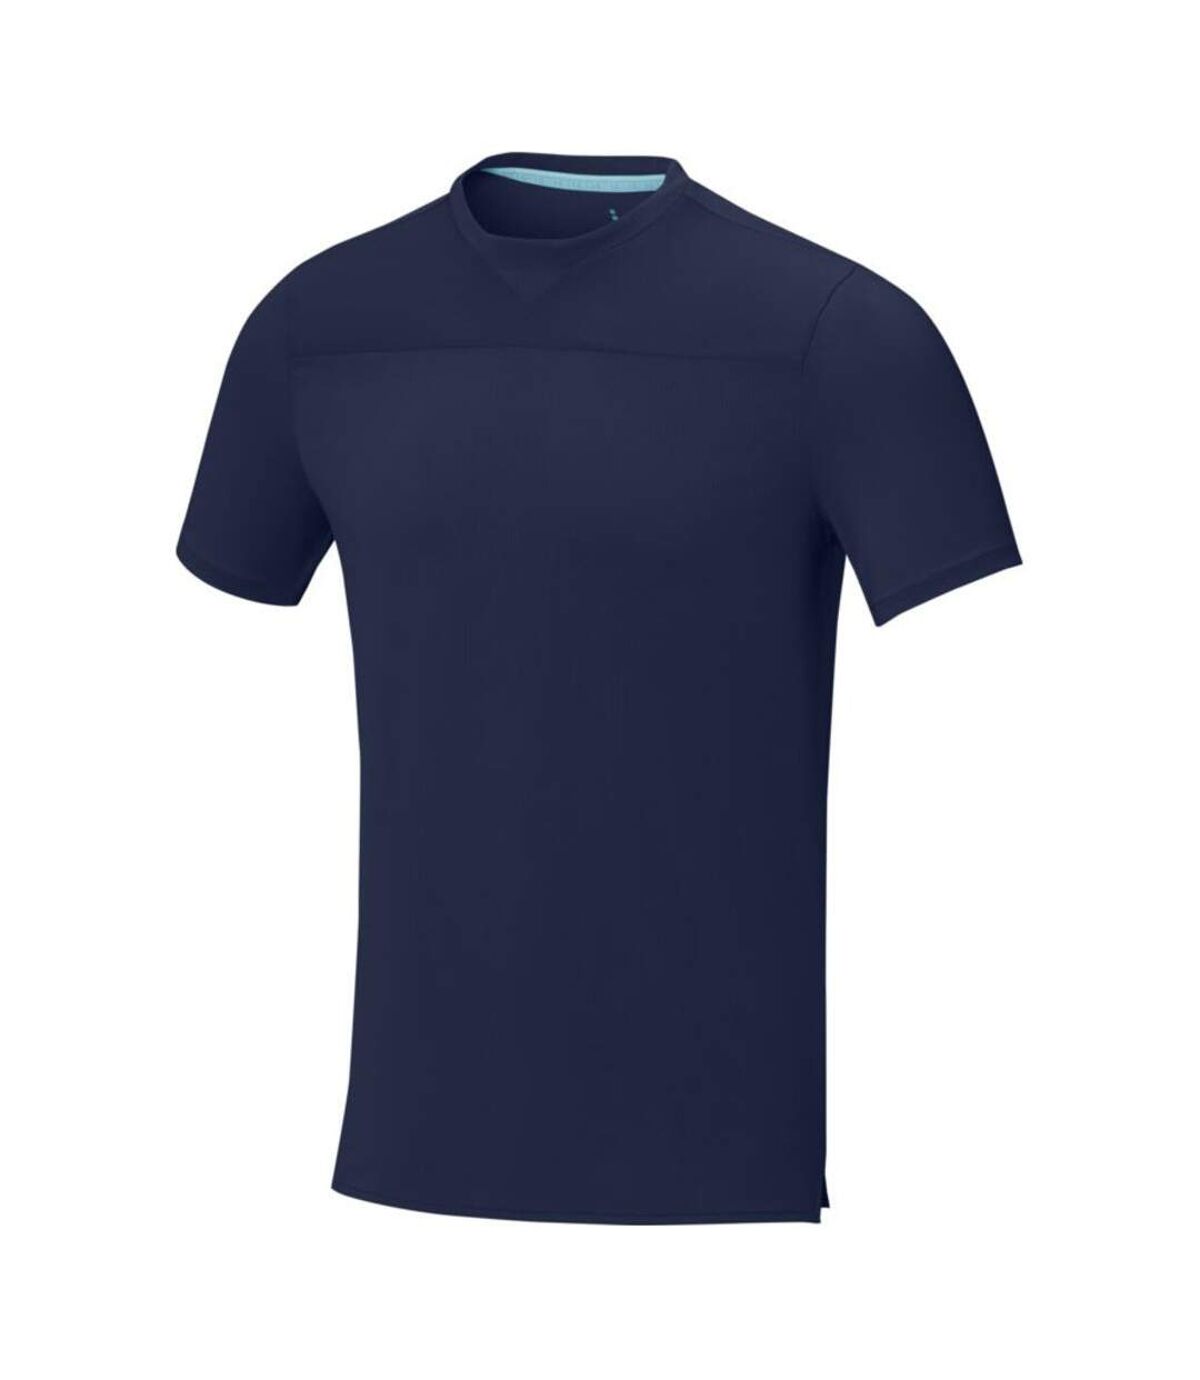 Elevate NXT - T-shirt BORAX - Homme (Bleu marine) - UTPF3955